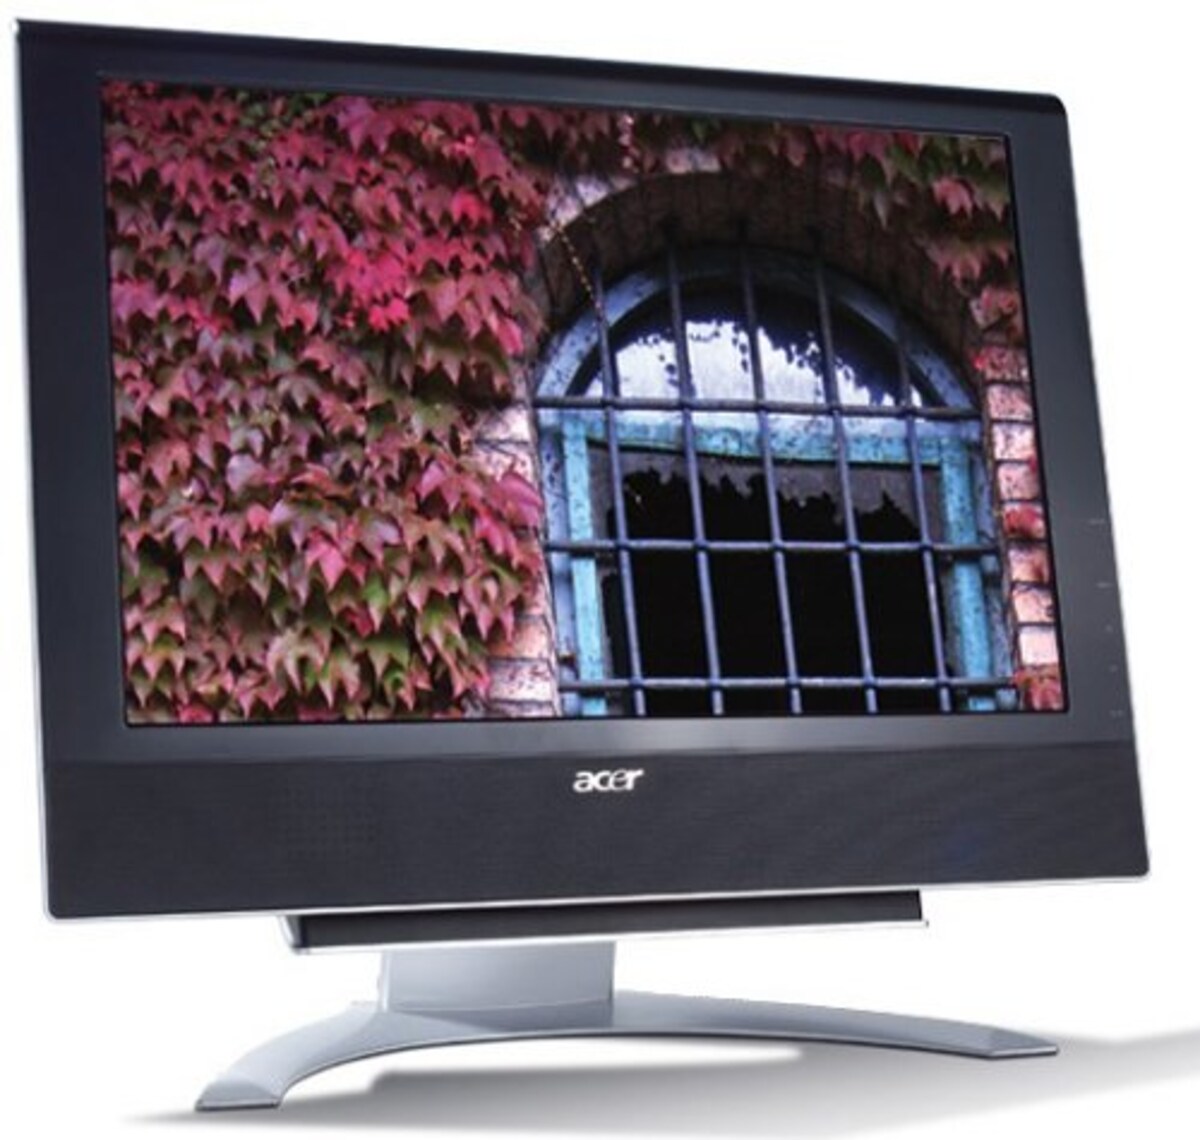  Acer 20インチワイド液晶ディスプレイ AL2032W画像2 